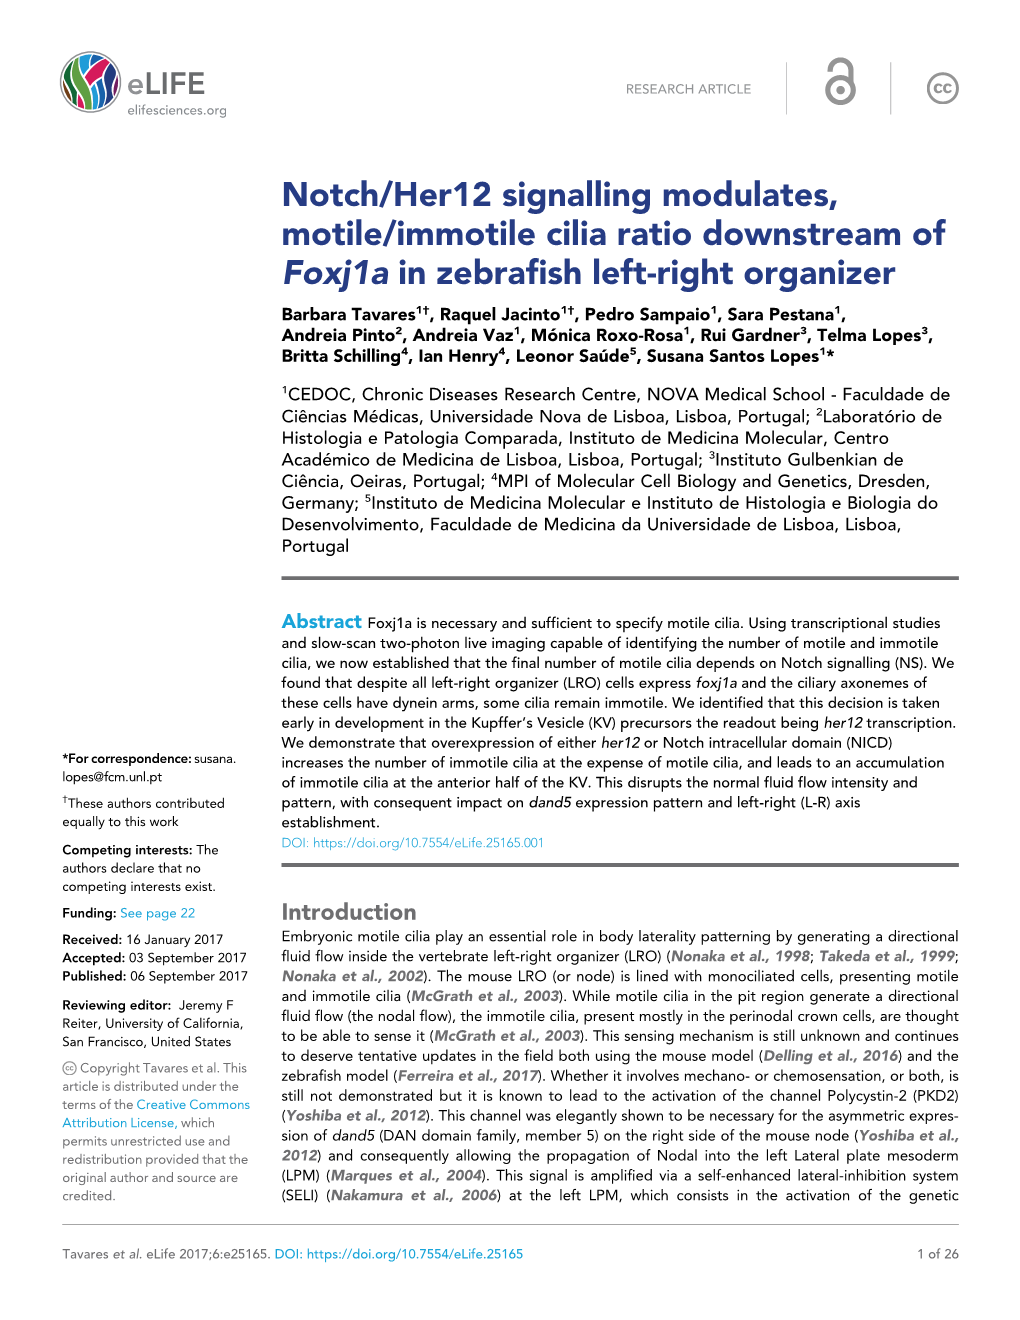 Notch/Her12 Signalling Modulates, Motile/Immotile Cilia Ratio